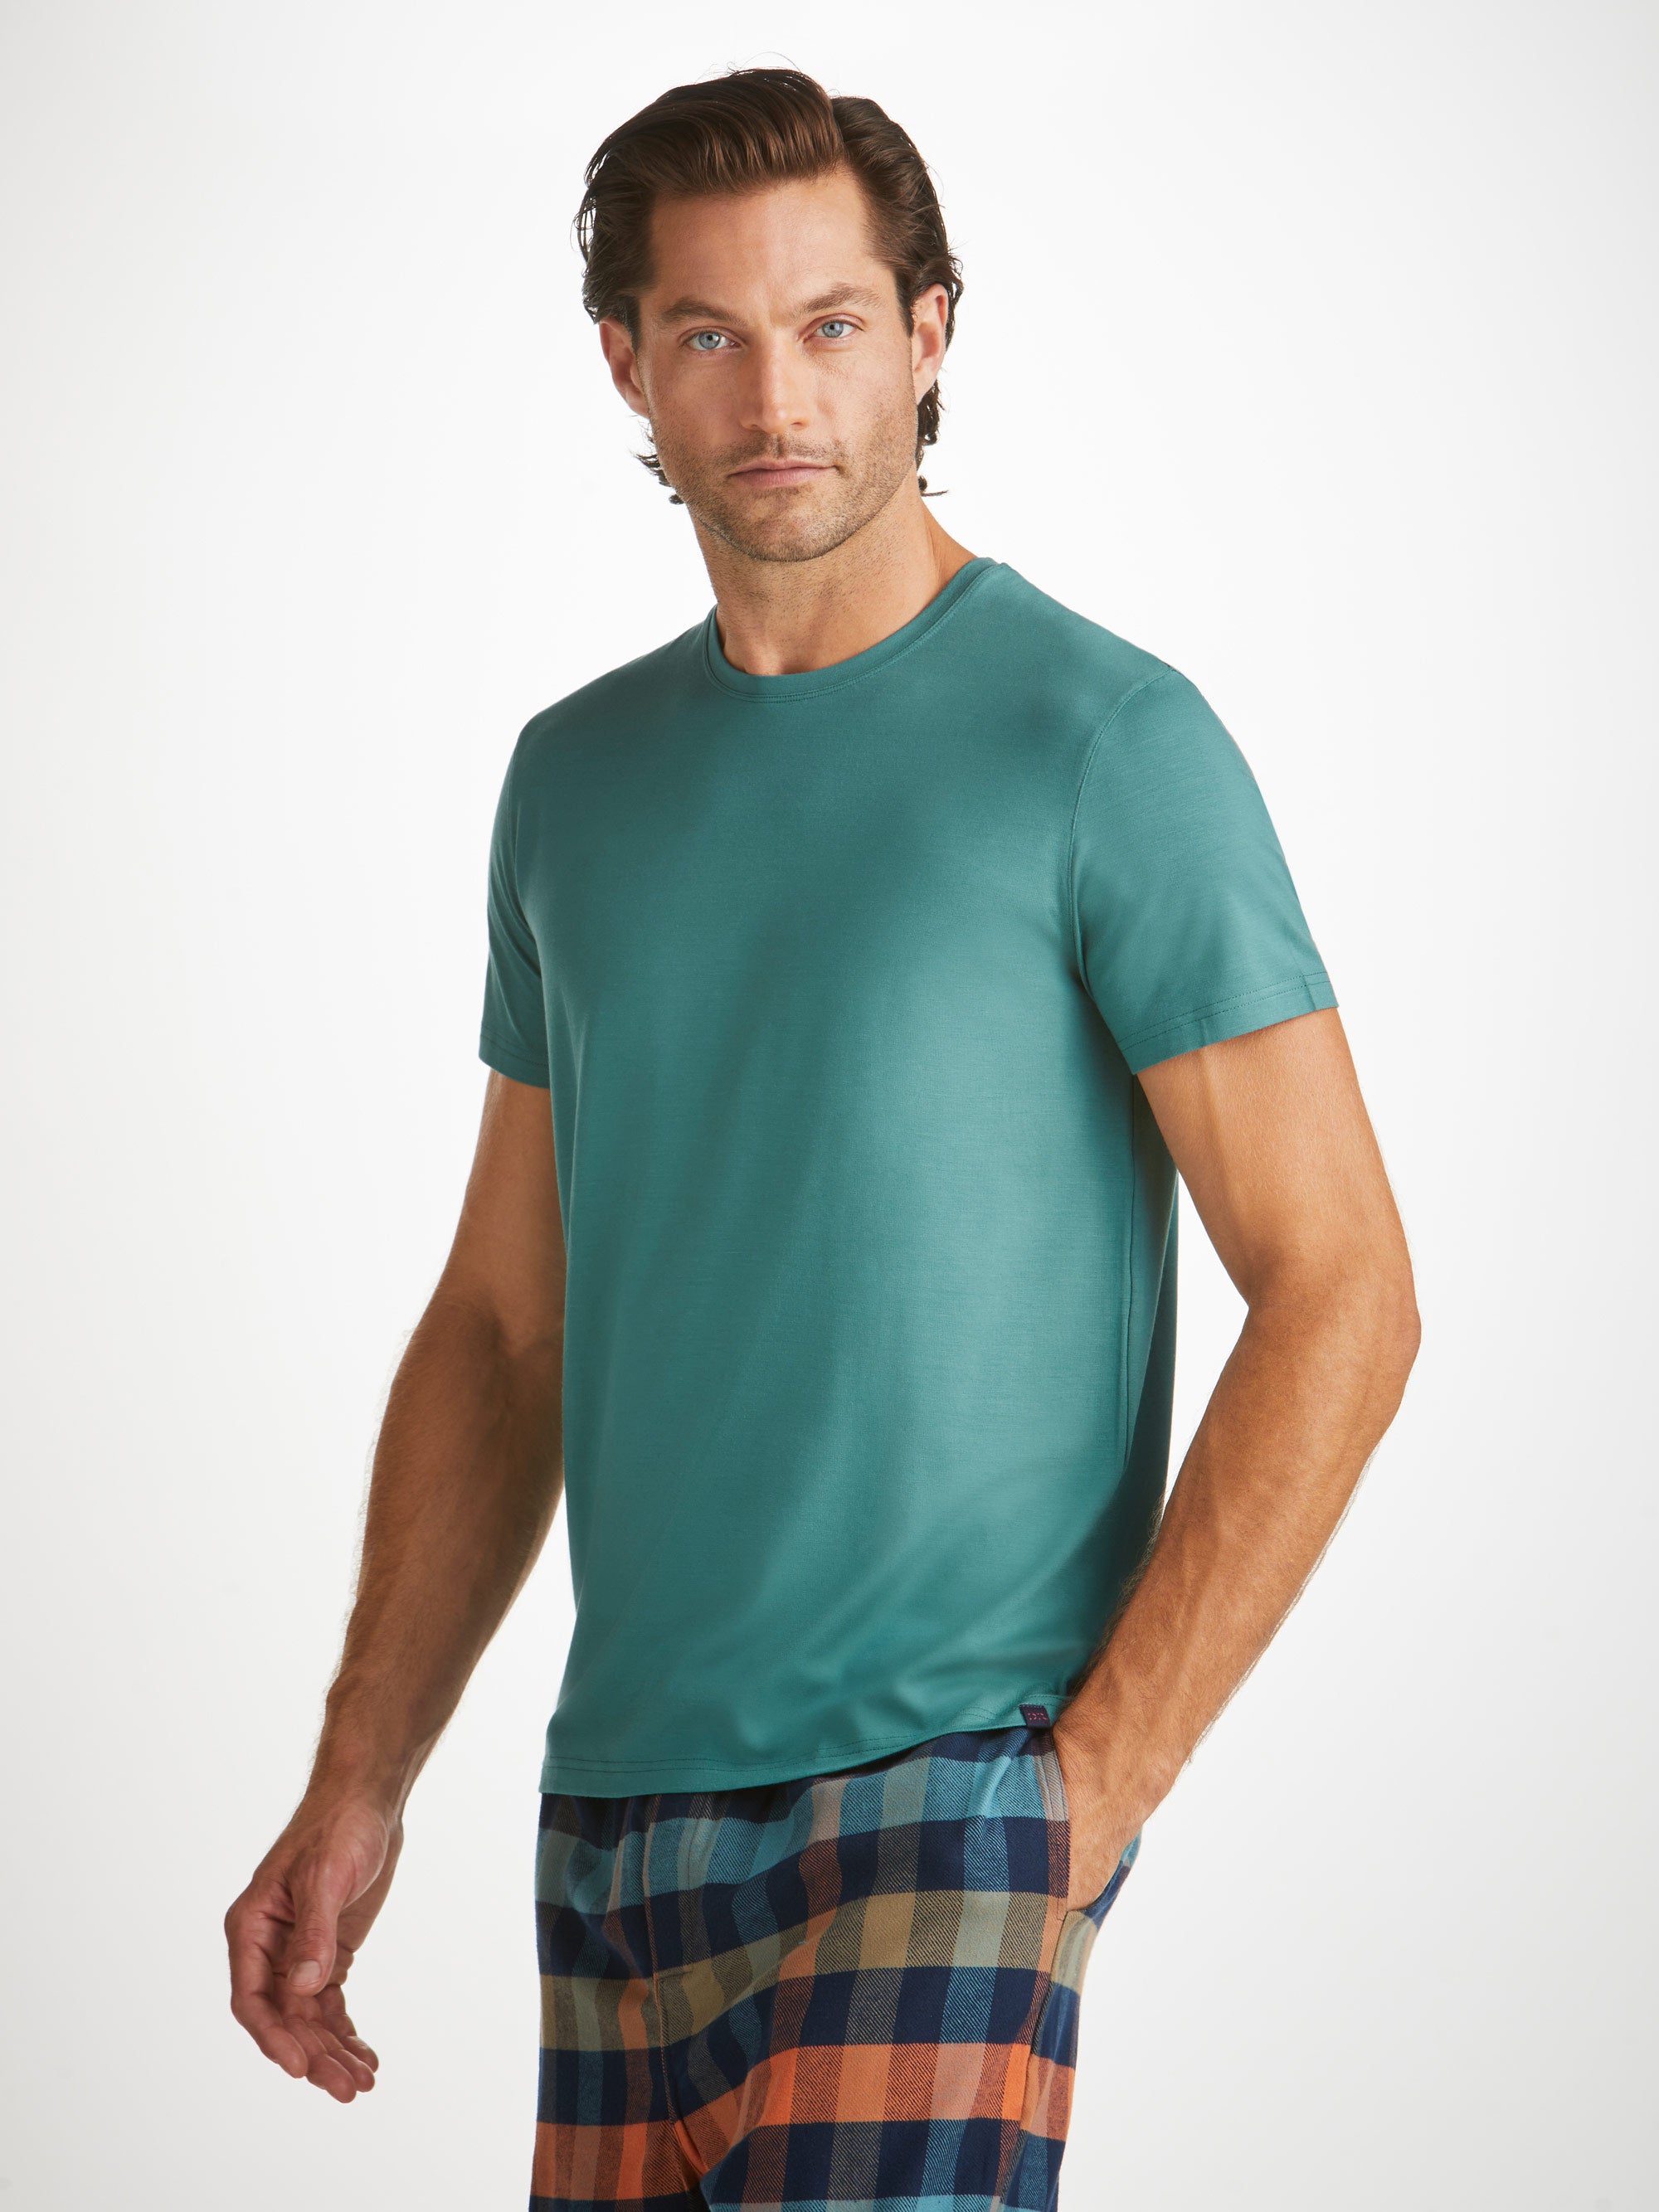 Men's T-Shirt Basel Micro Modal Stretch Teal